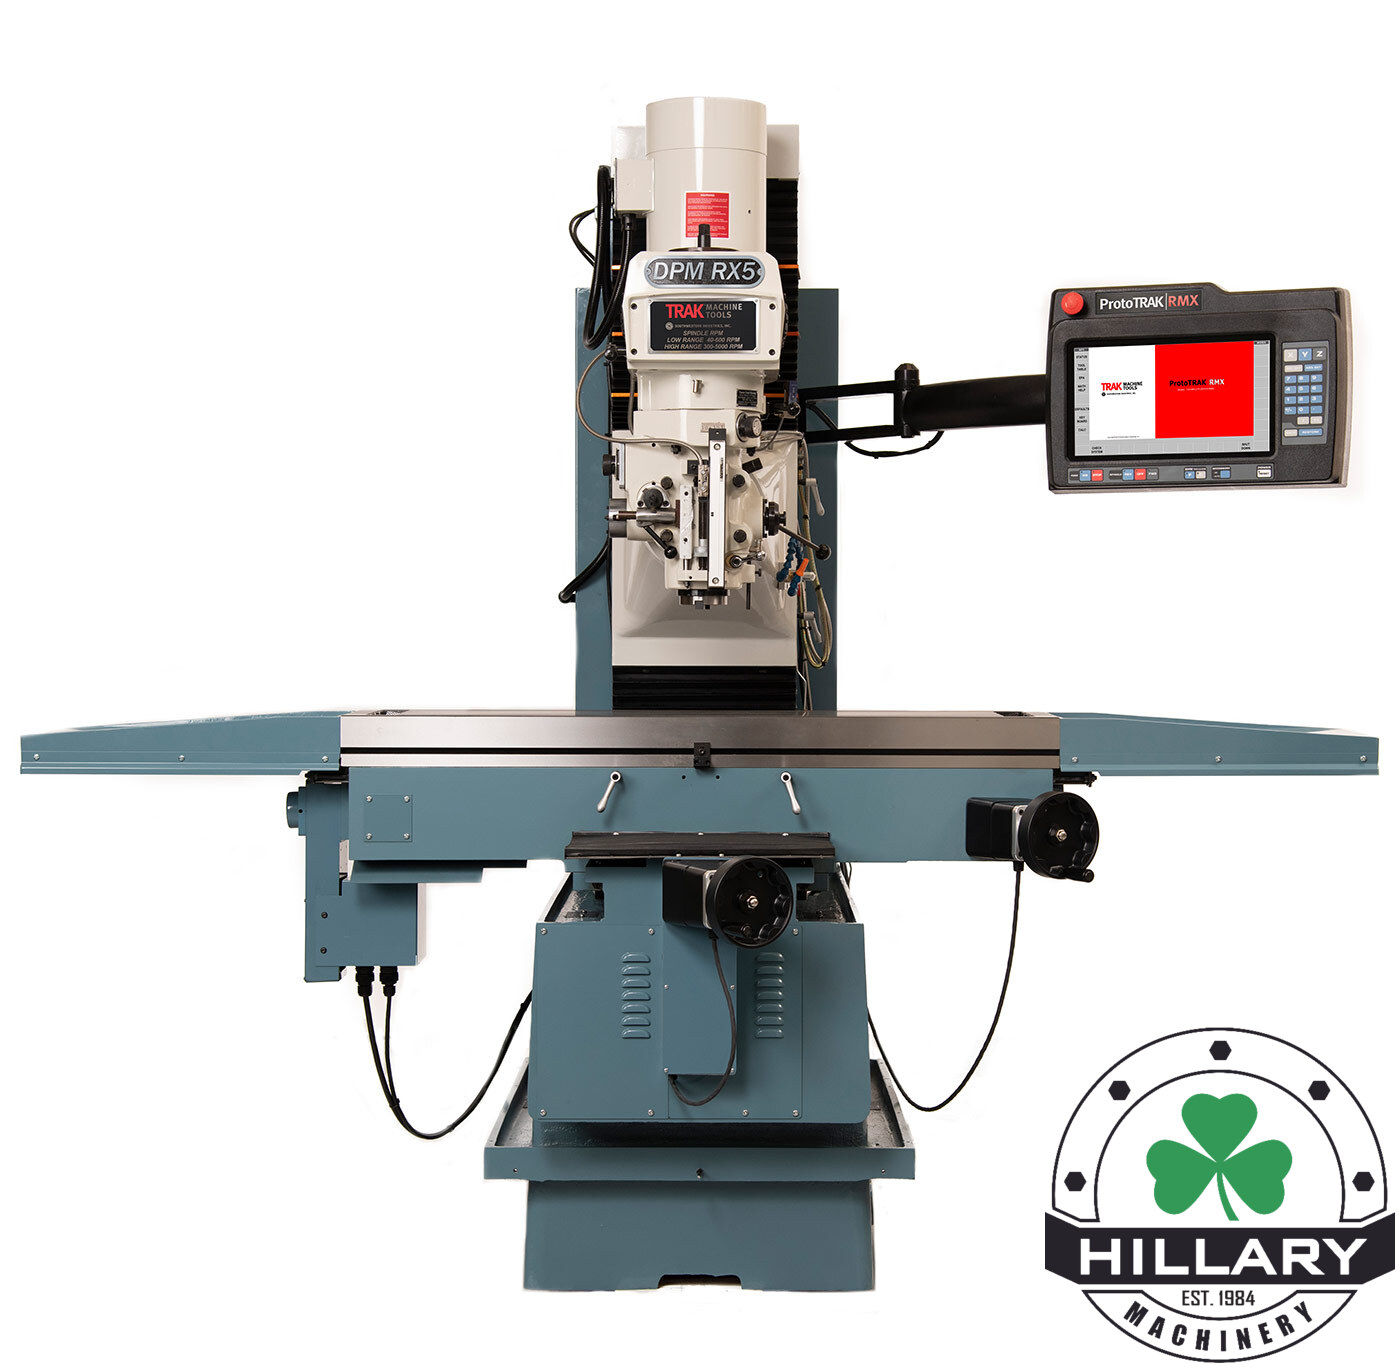 SOUTHWESTERN INDUSTRIES TRAK DPM RX5 Tool Room Mills | Hillary Machinery